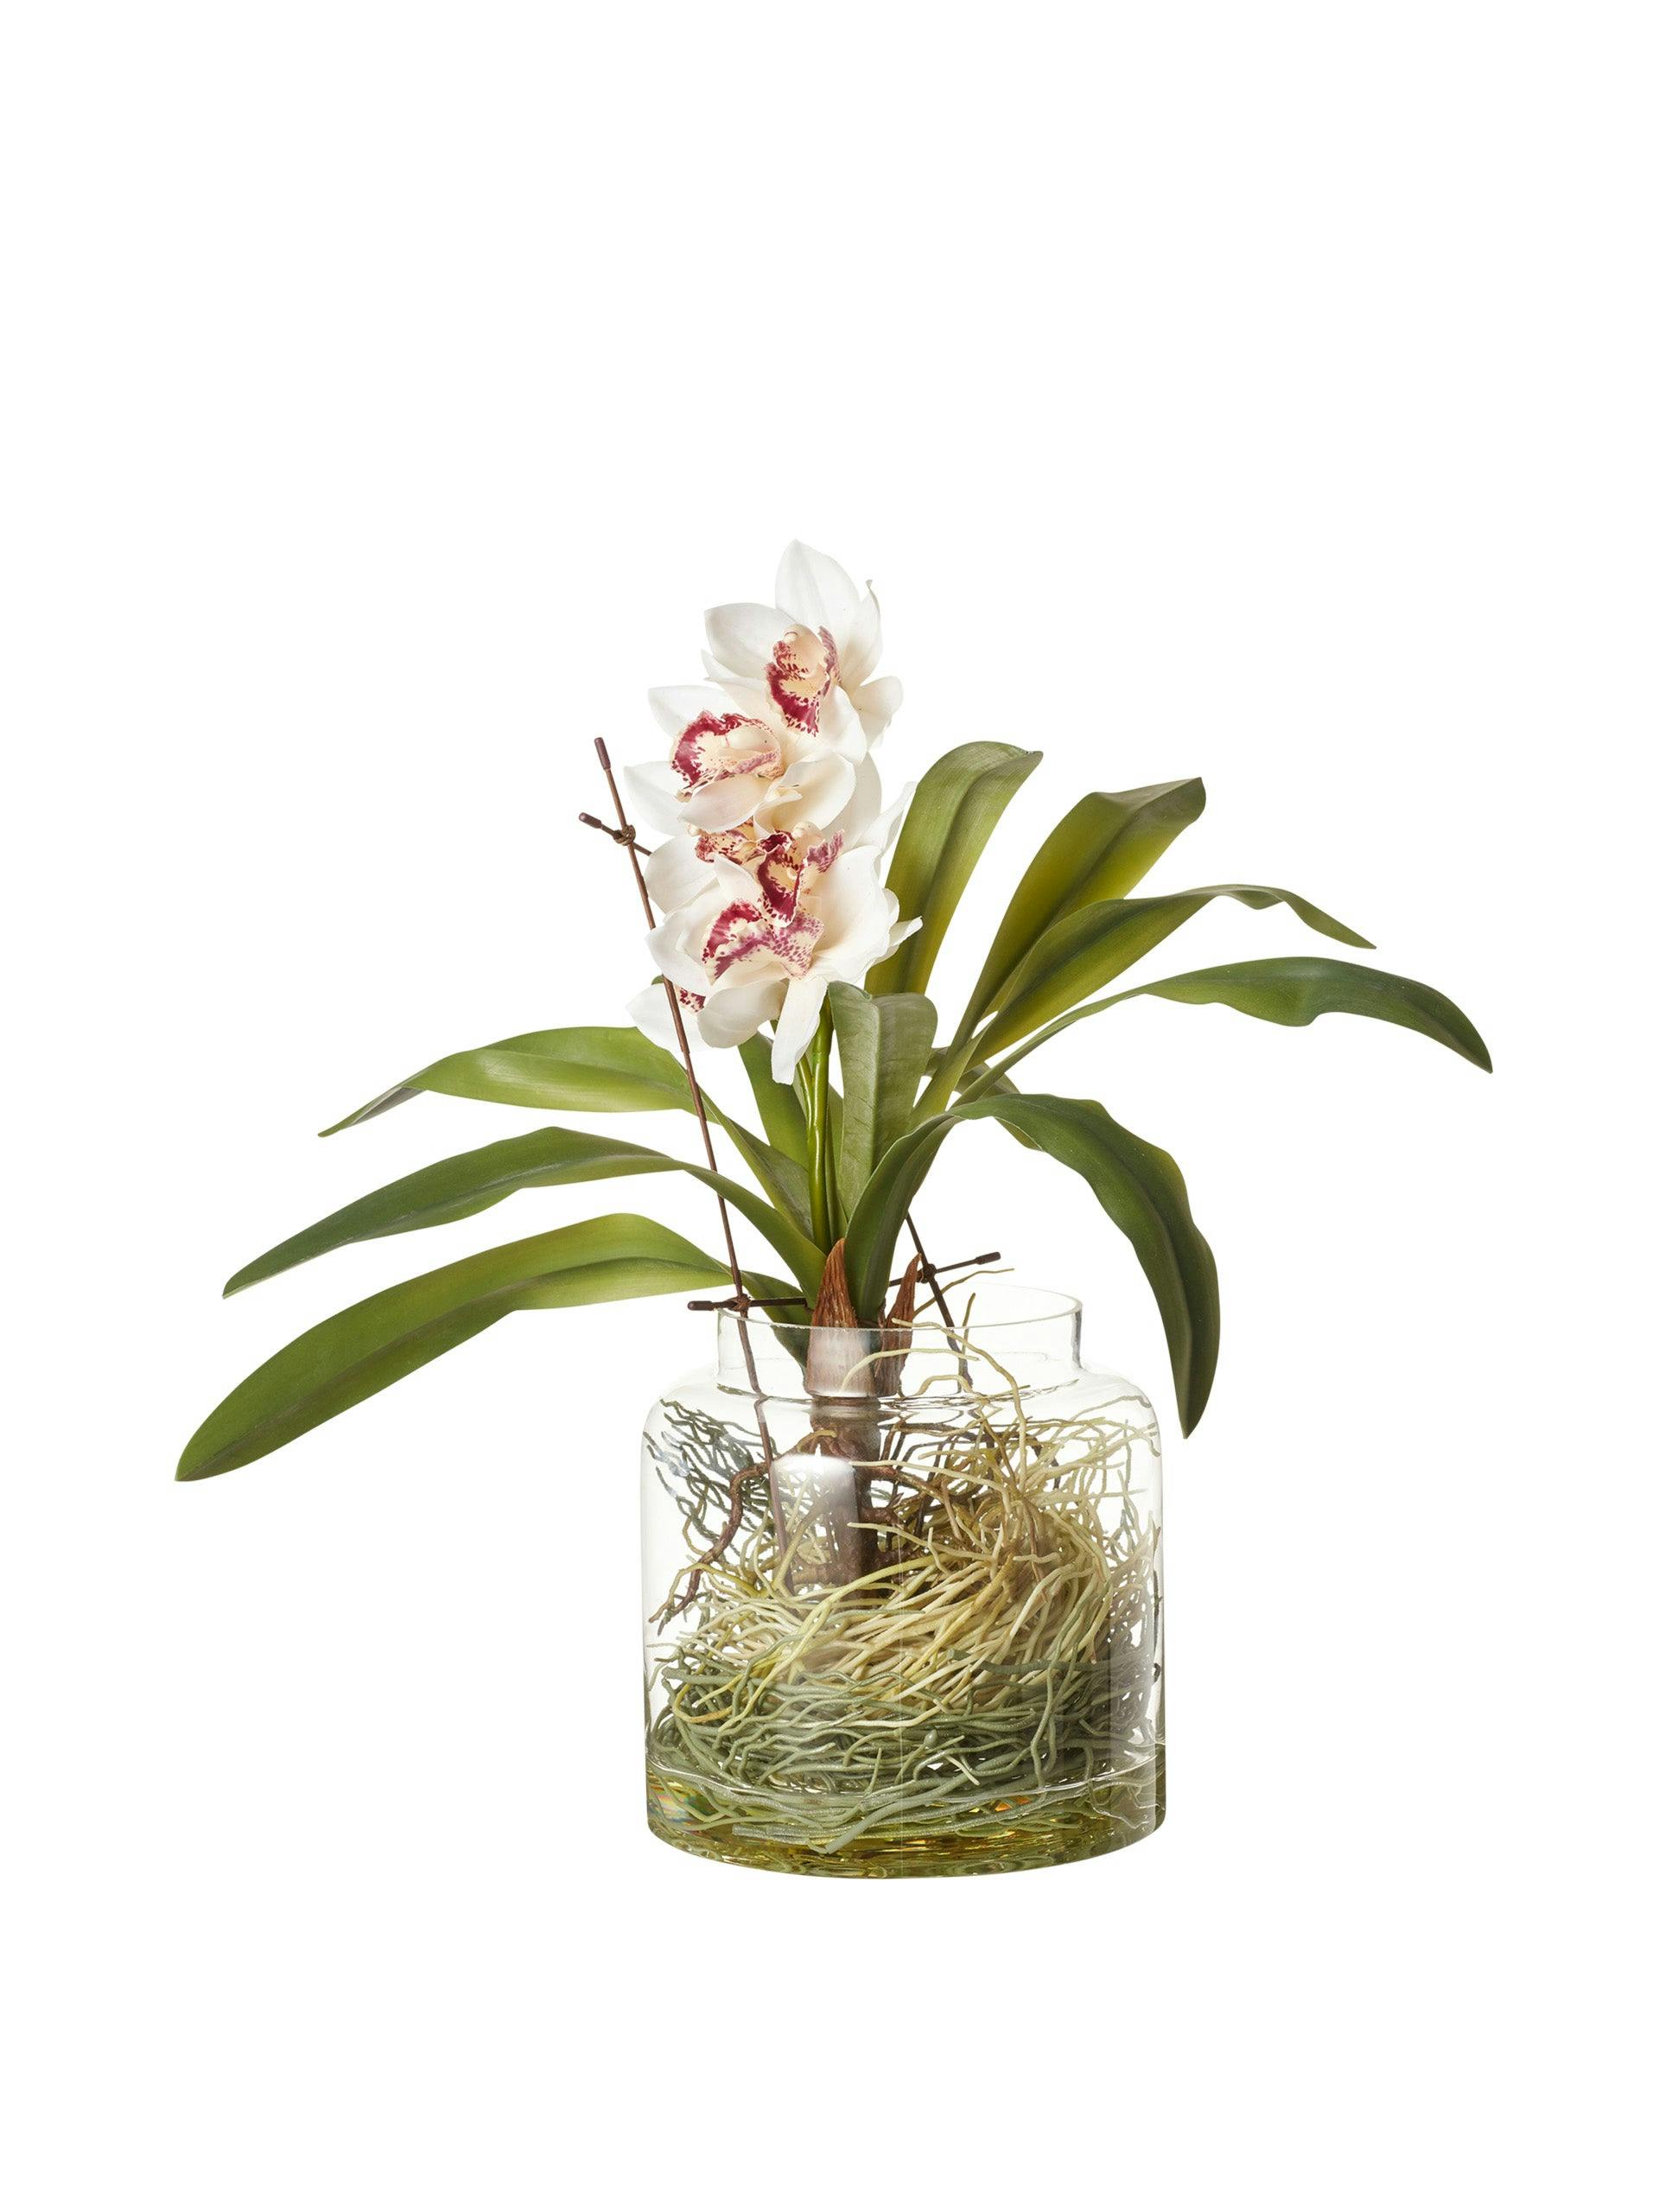 Faux cymbidium orchid plant